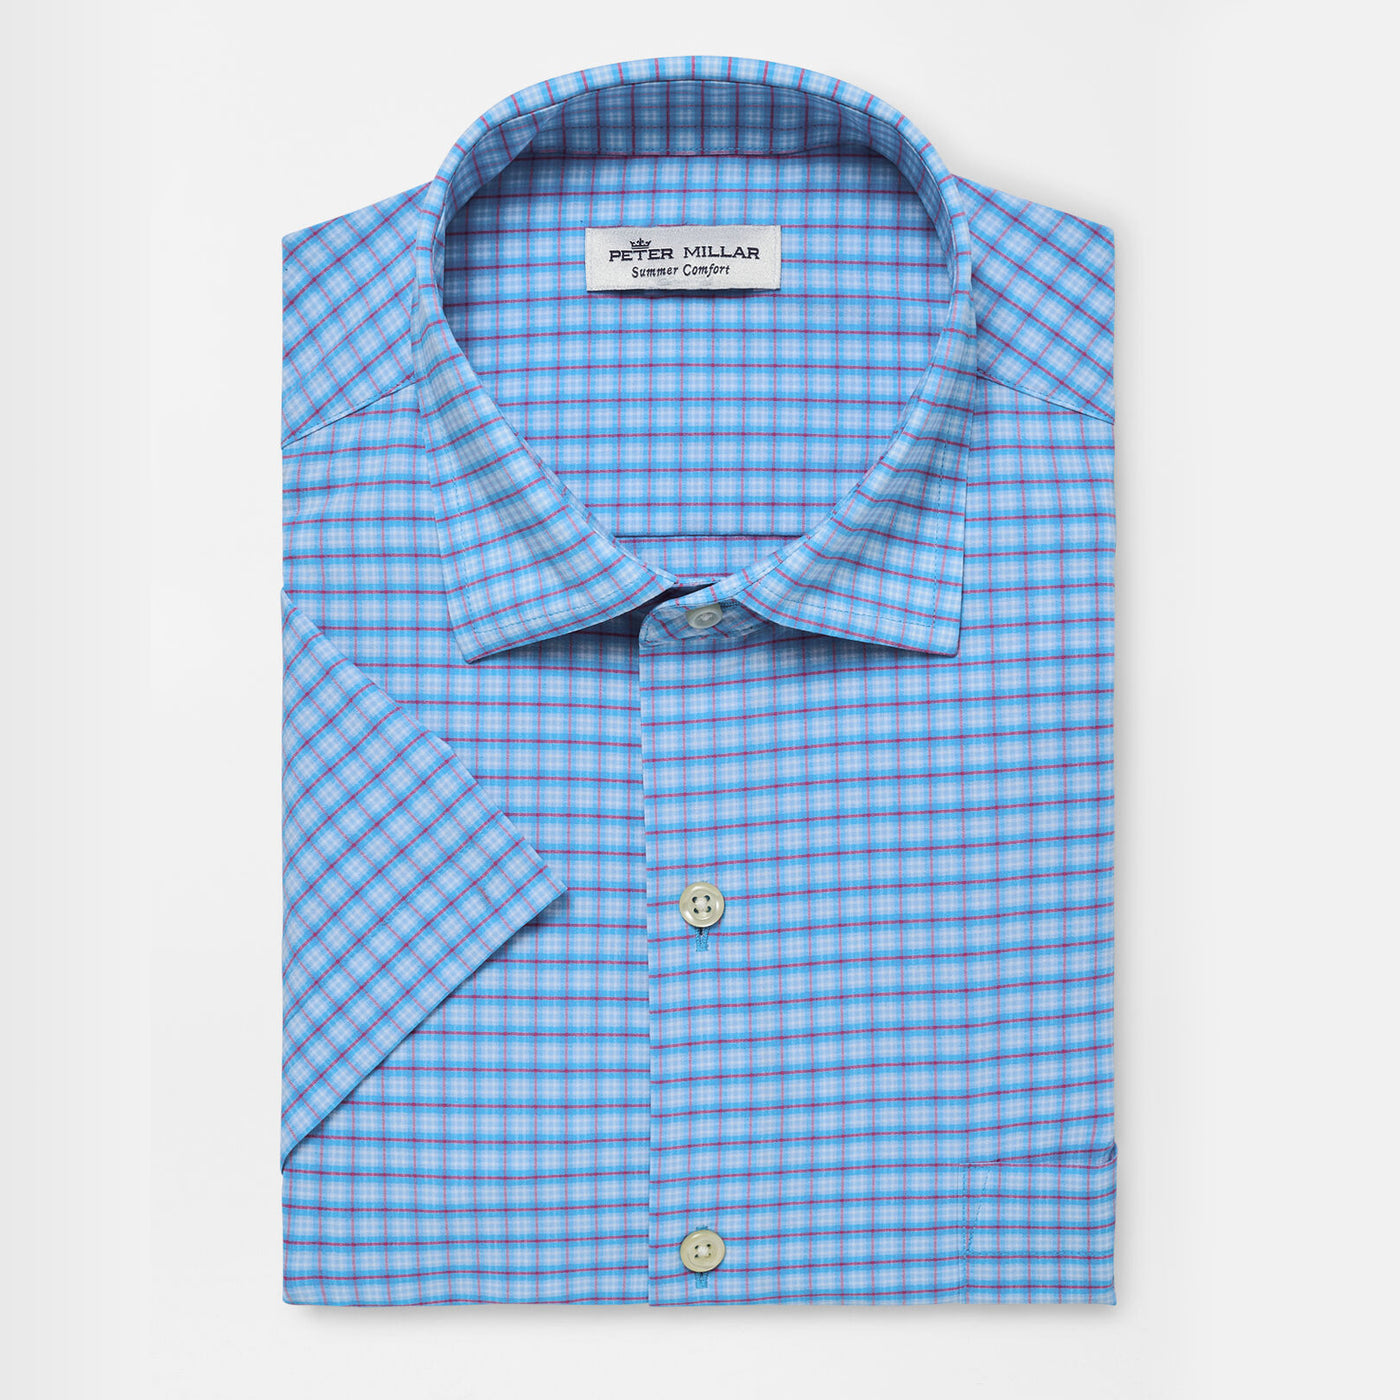 Peter Millar Berkeley Performance Sport Shirt-MENS CLOTHING-Cottage Blue-M-Kevin's Fine Outdoor Gear & Apparel